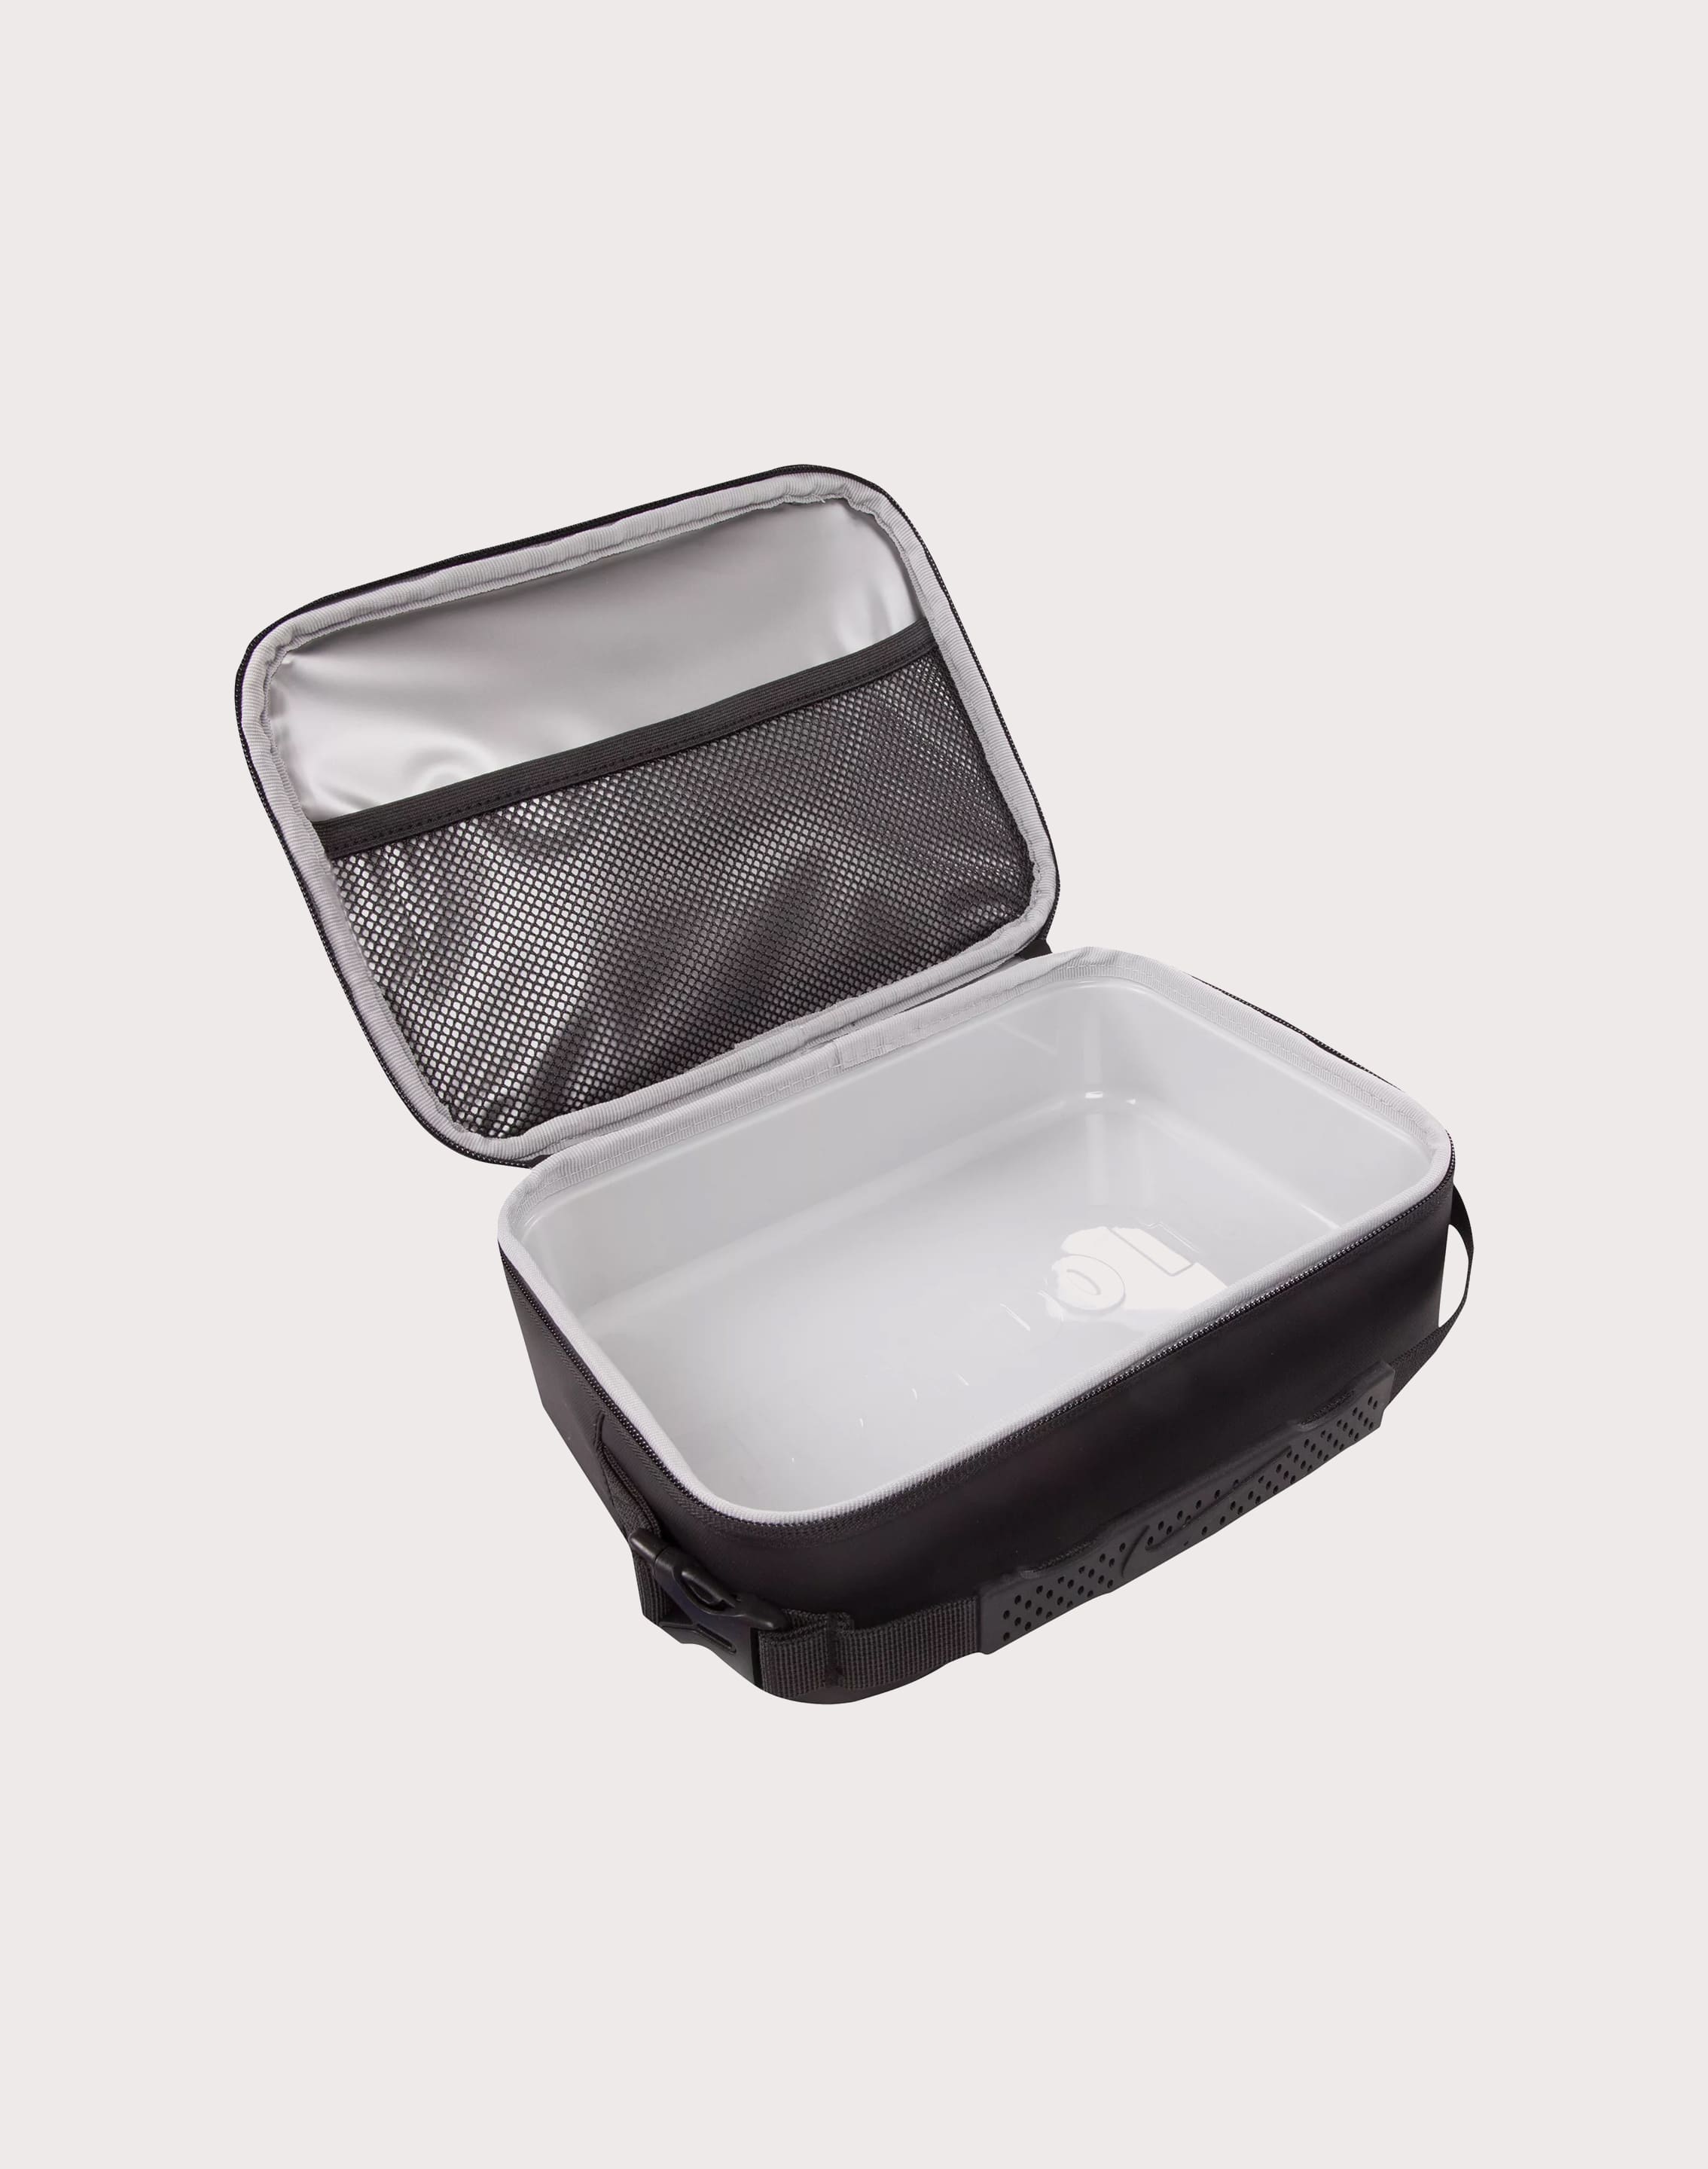 Nike Futura Fuel Black Lunchbox